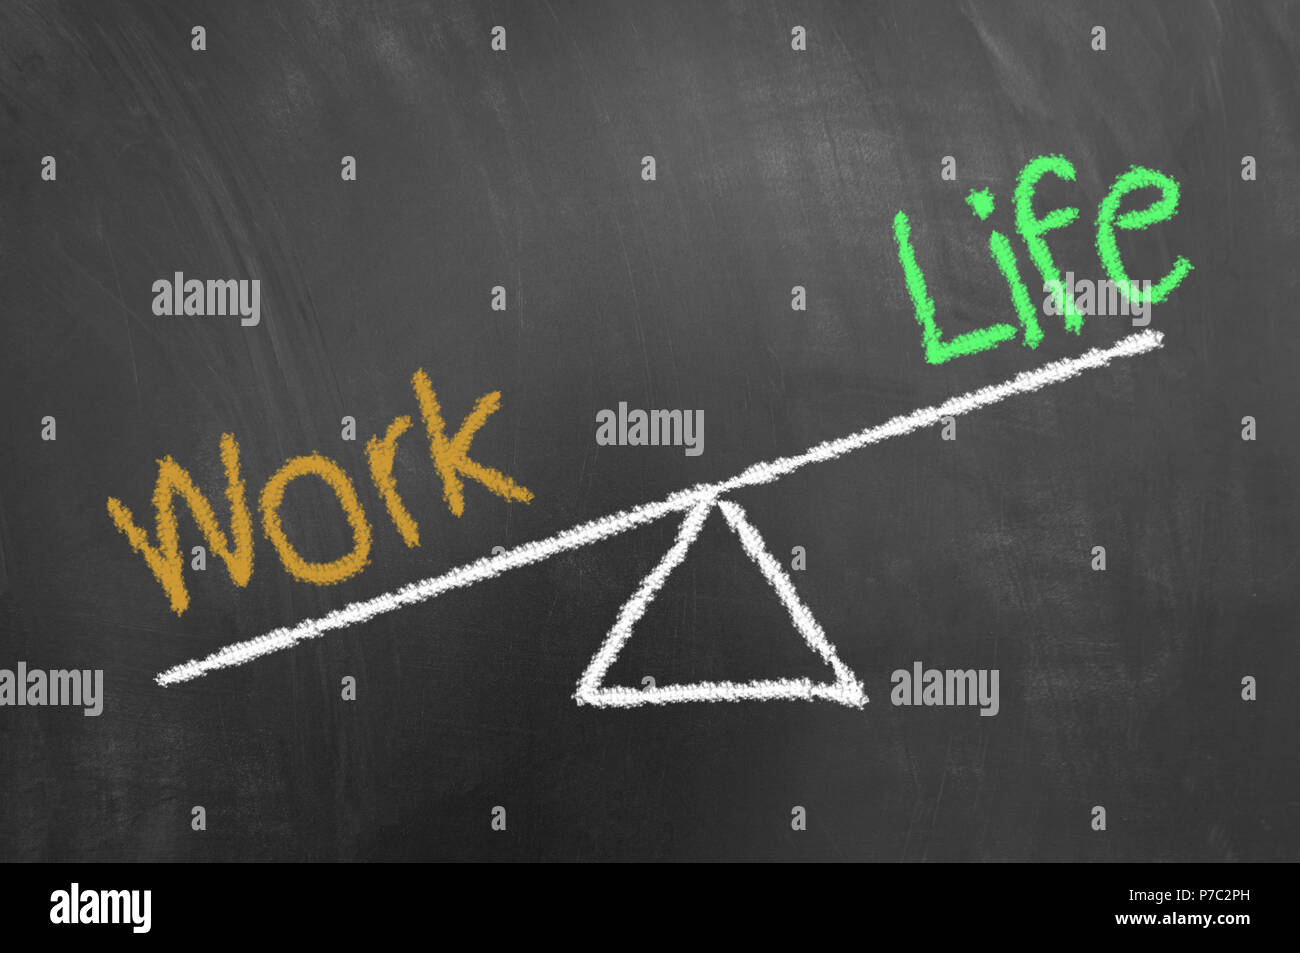 Work life imbalance chalk drawing on blackboard or chalkboard as stress job unhealthy inequality lifestyle concept Stock Photo